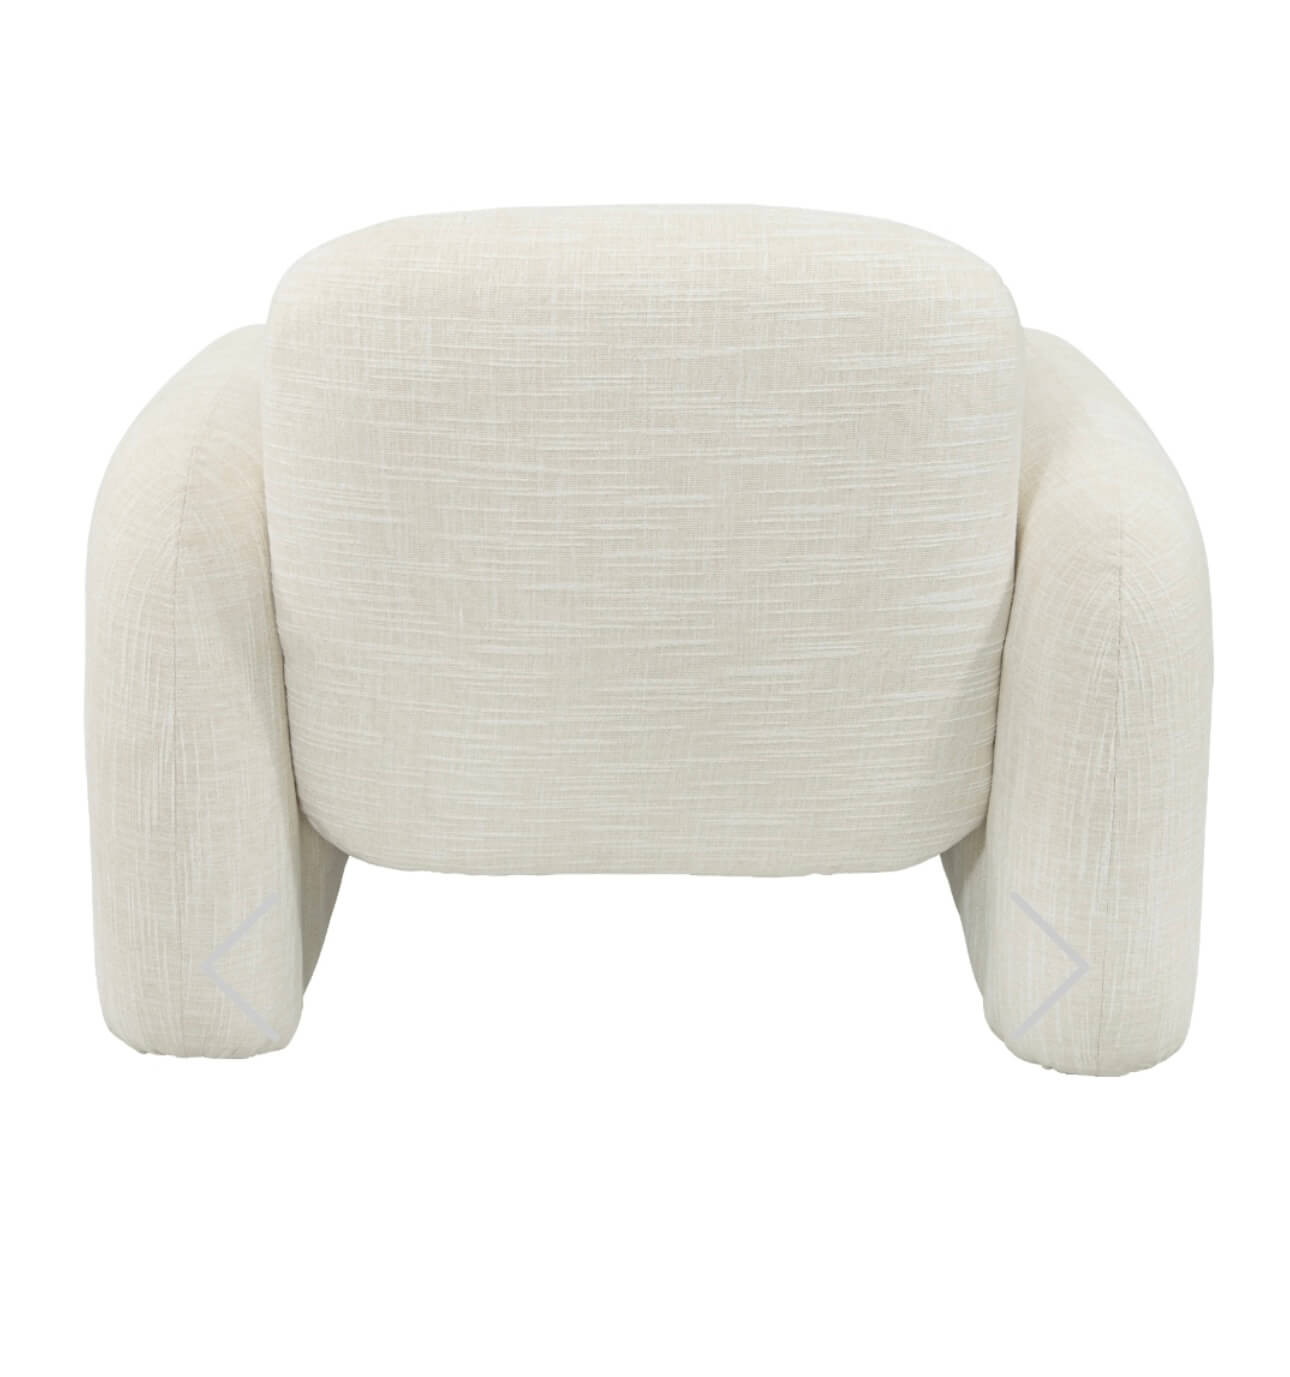 Chic Cream Fabric Armchair